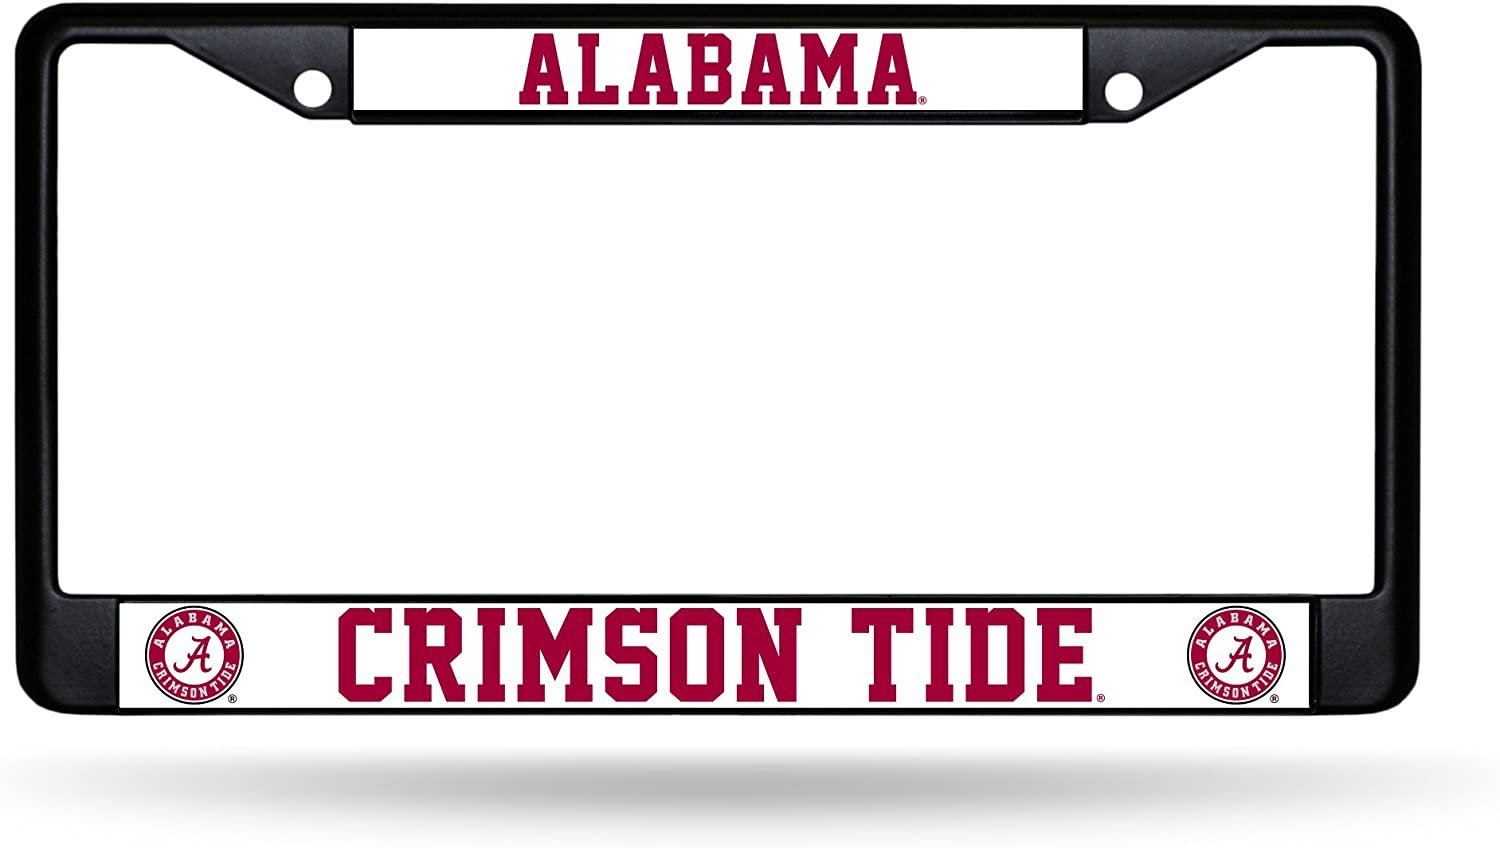 University of Alabama Crimson Tide Black Metal License Plate Frame Chrome Tag Cover 6x12 Inch